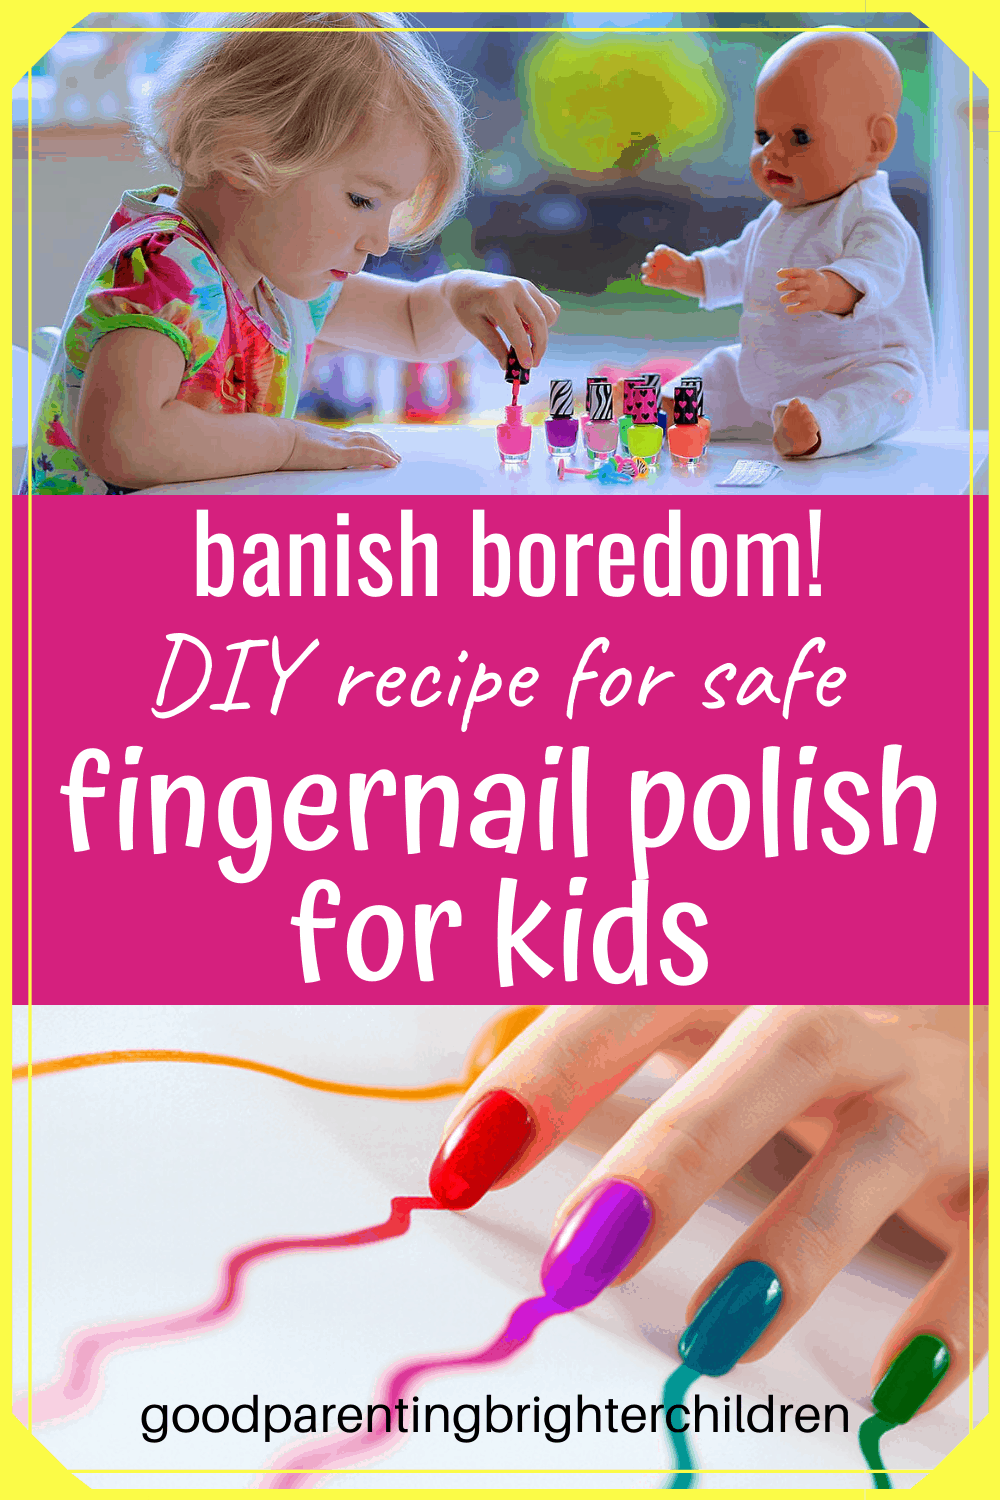 How to Make Fun, Fabulous & Safe Fingernail Polish with Your Kids